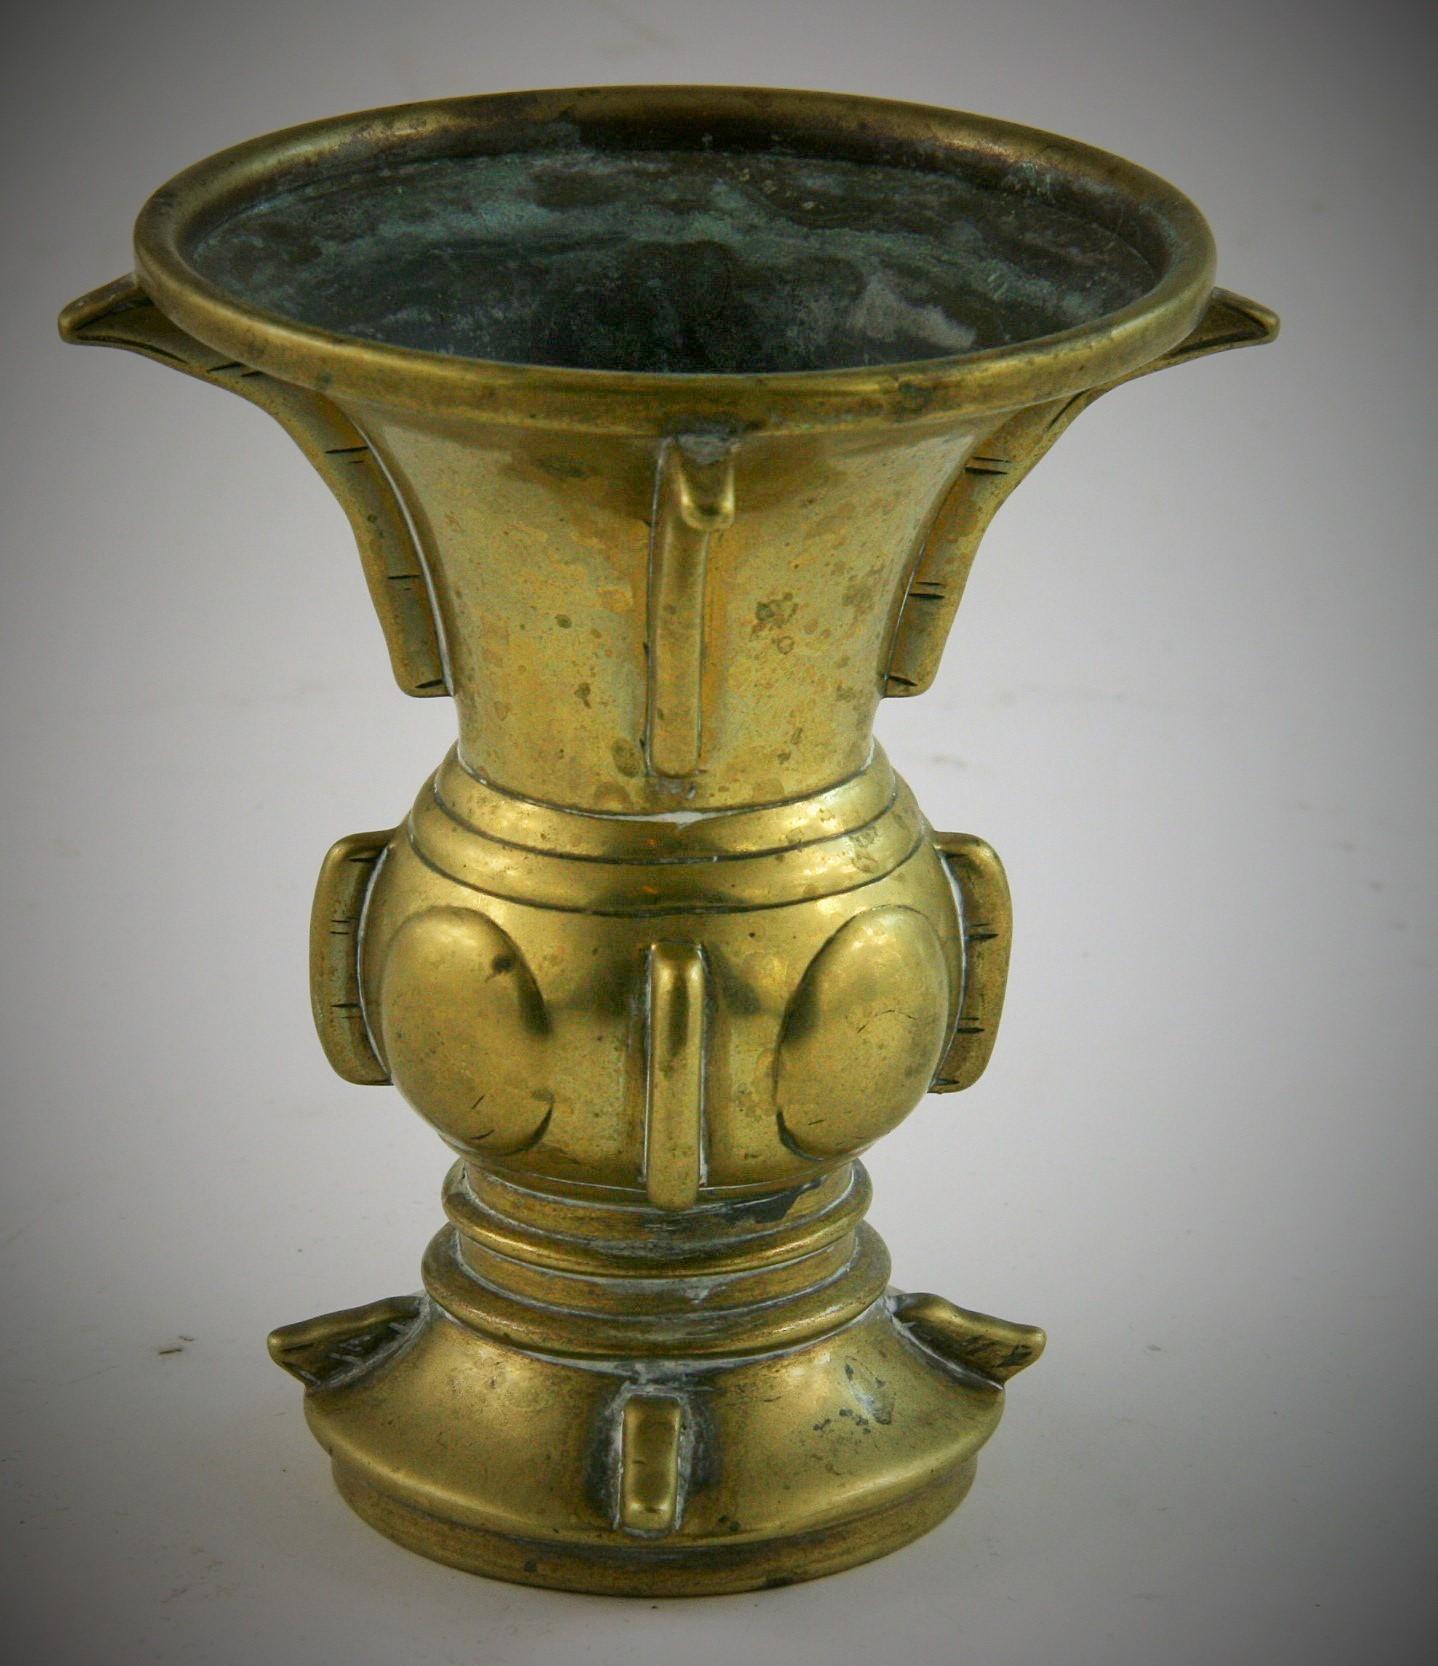 8-270Japanese   brass decorative vase/incense burner
Unknown makers mark on bottom.